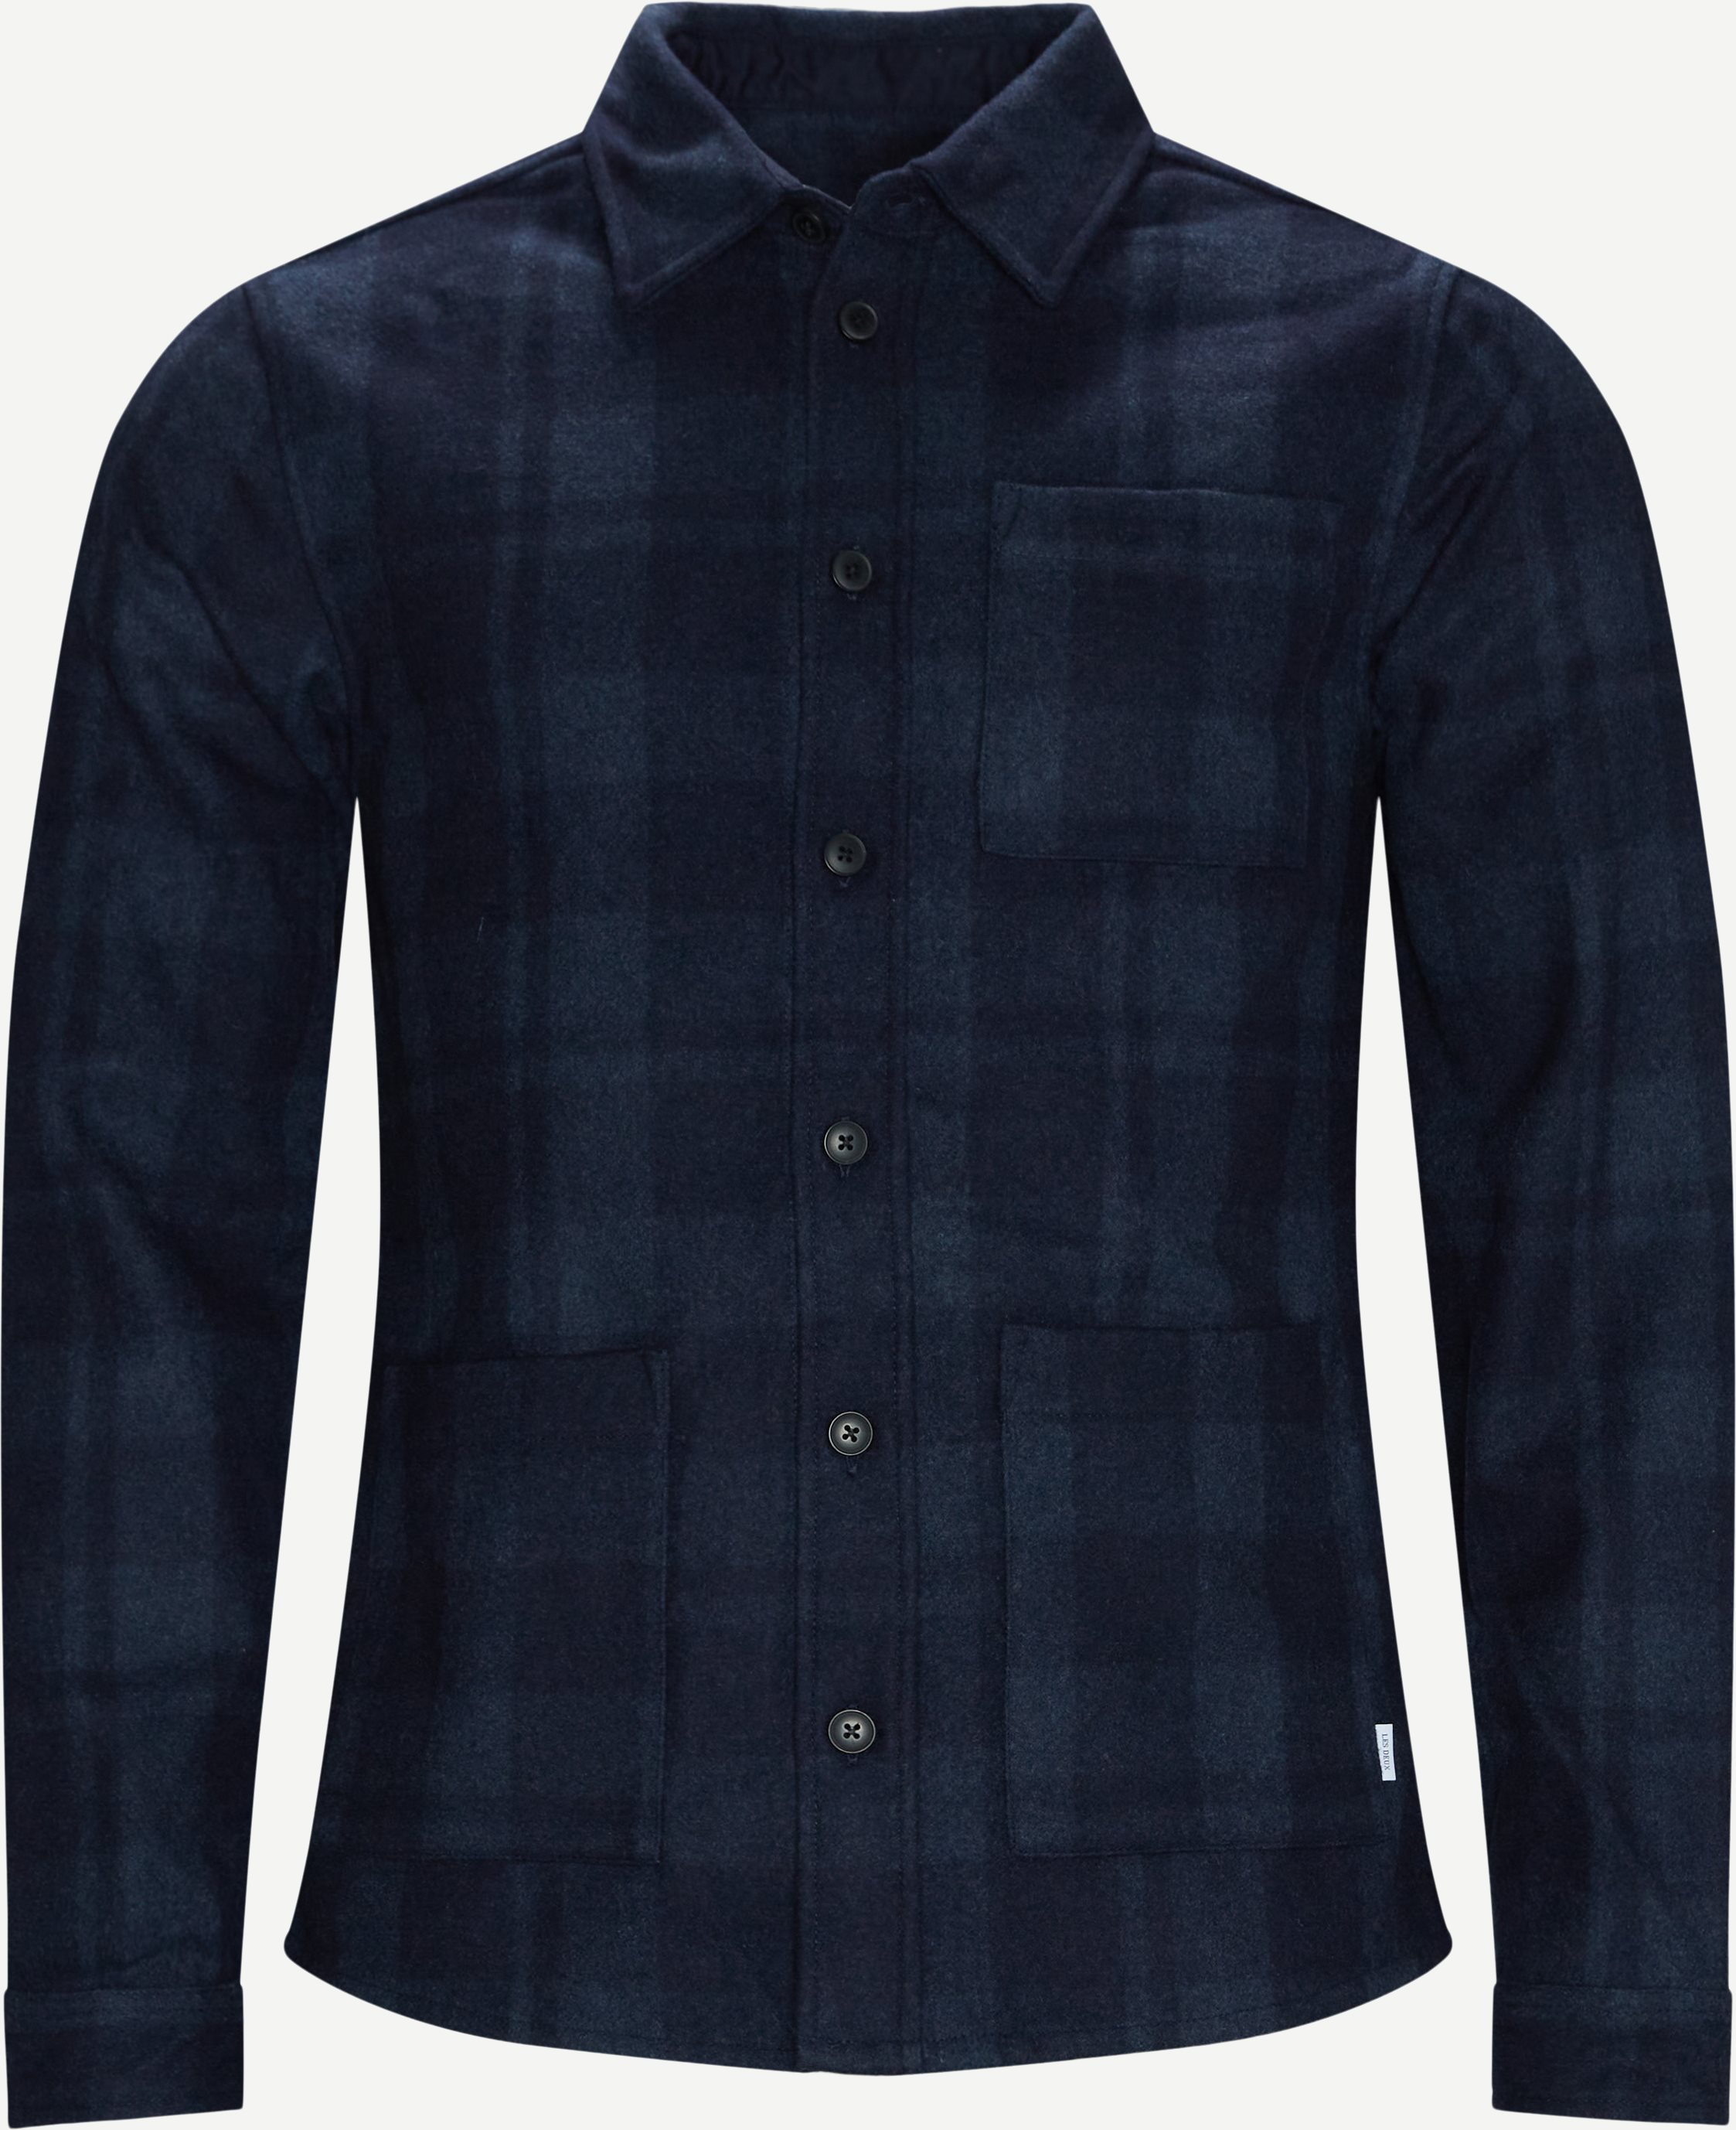 Jason Check Wool Hybrid Overshirt - Jakker - Regular fit - Blå